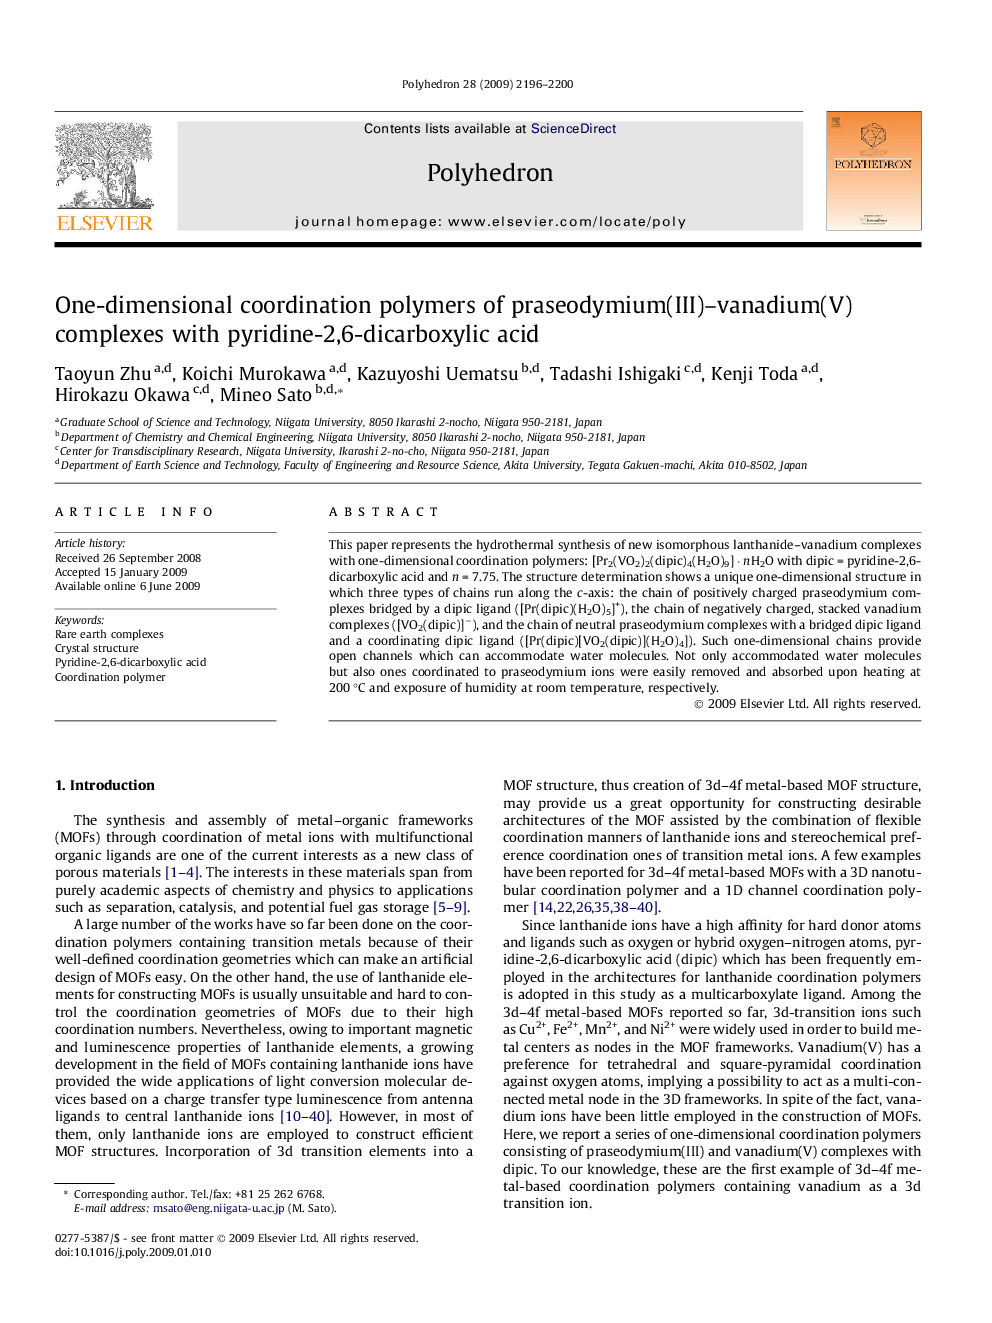 One-dimensional coordination polymers of praseodymium(III)–vanadium(V) complexes with pyridine-2,6-dicarboxylic acid